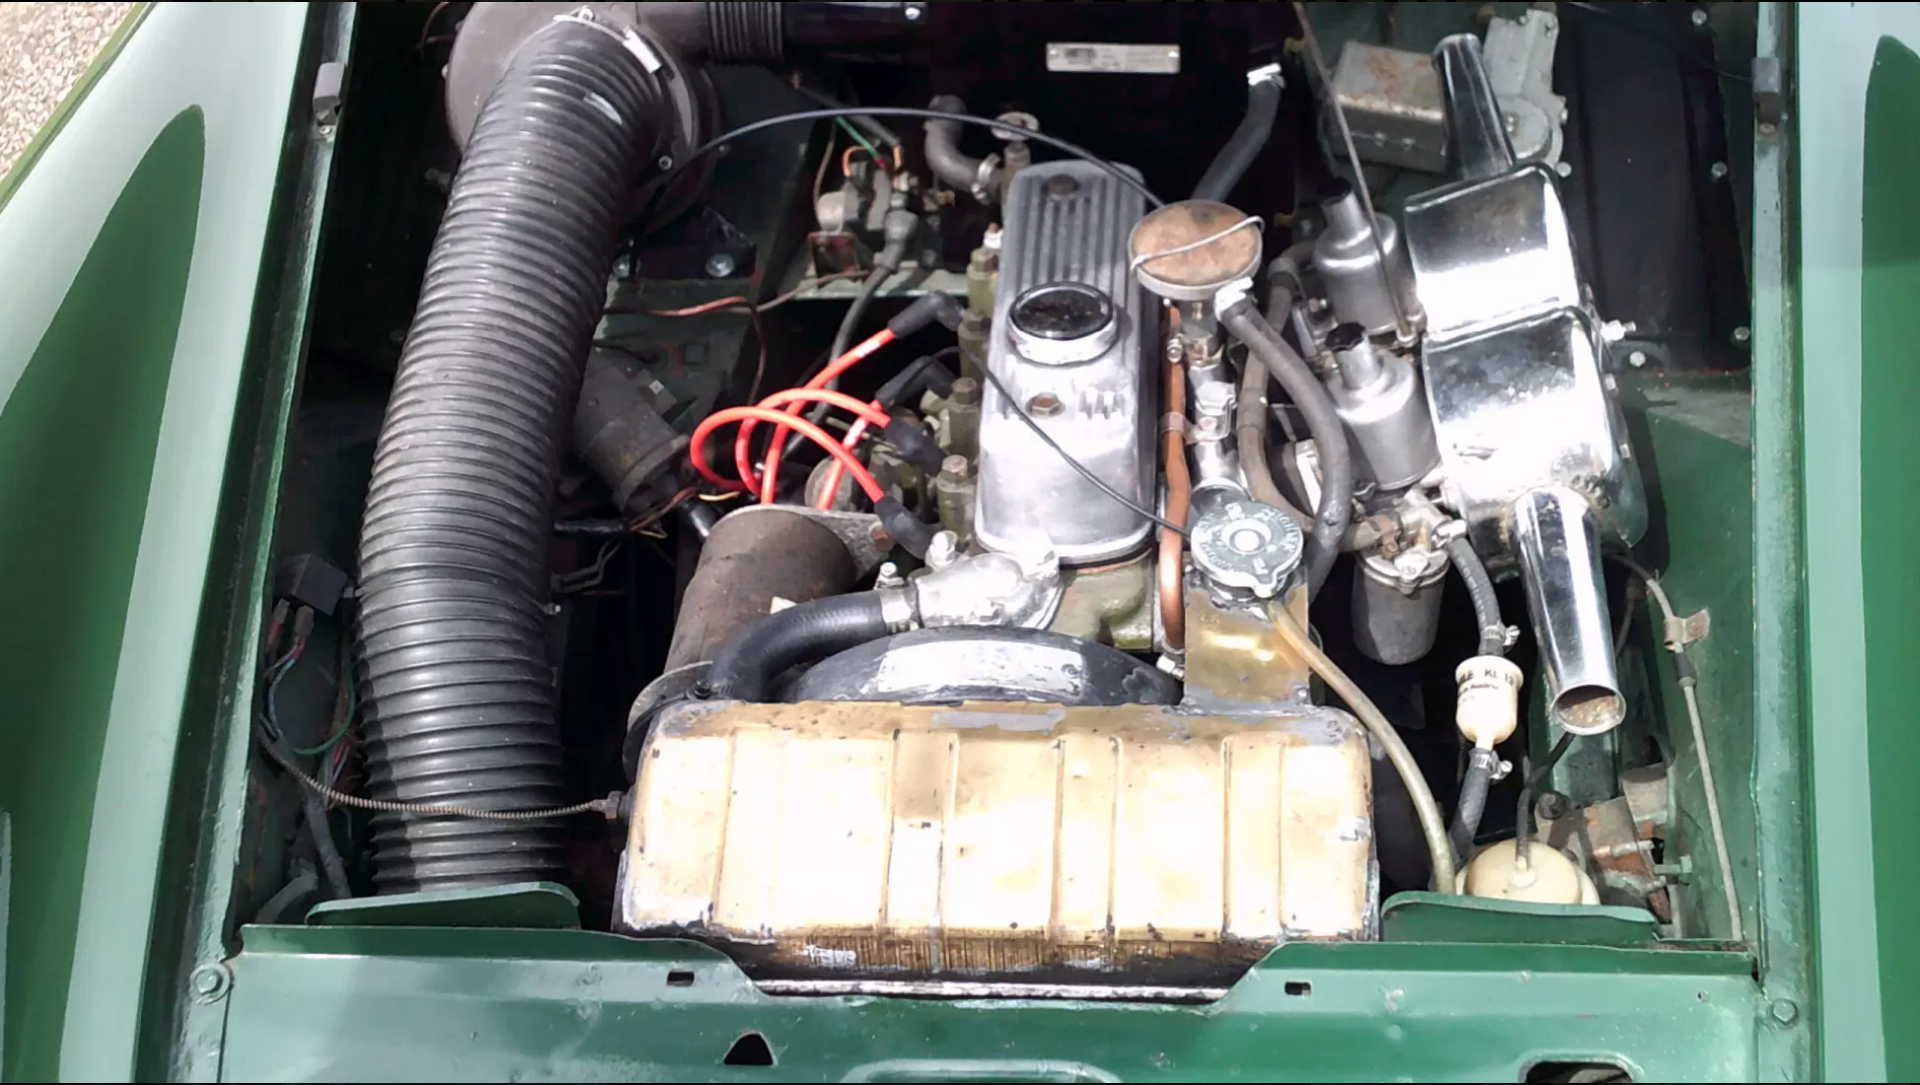 1967 Austin-Healey Sprite 1098cc - Image 2 of 6